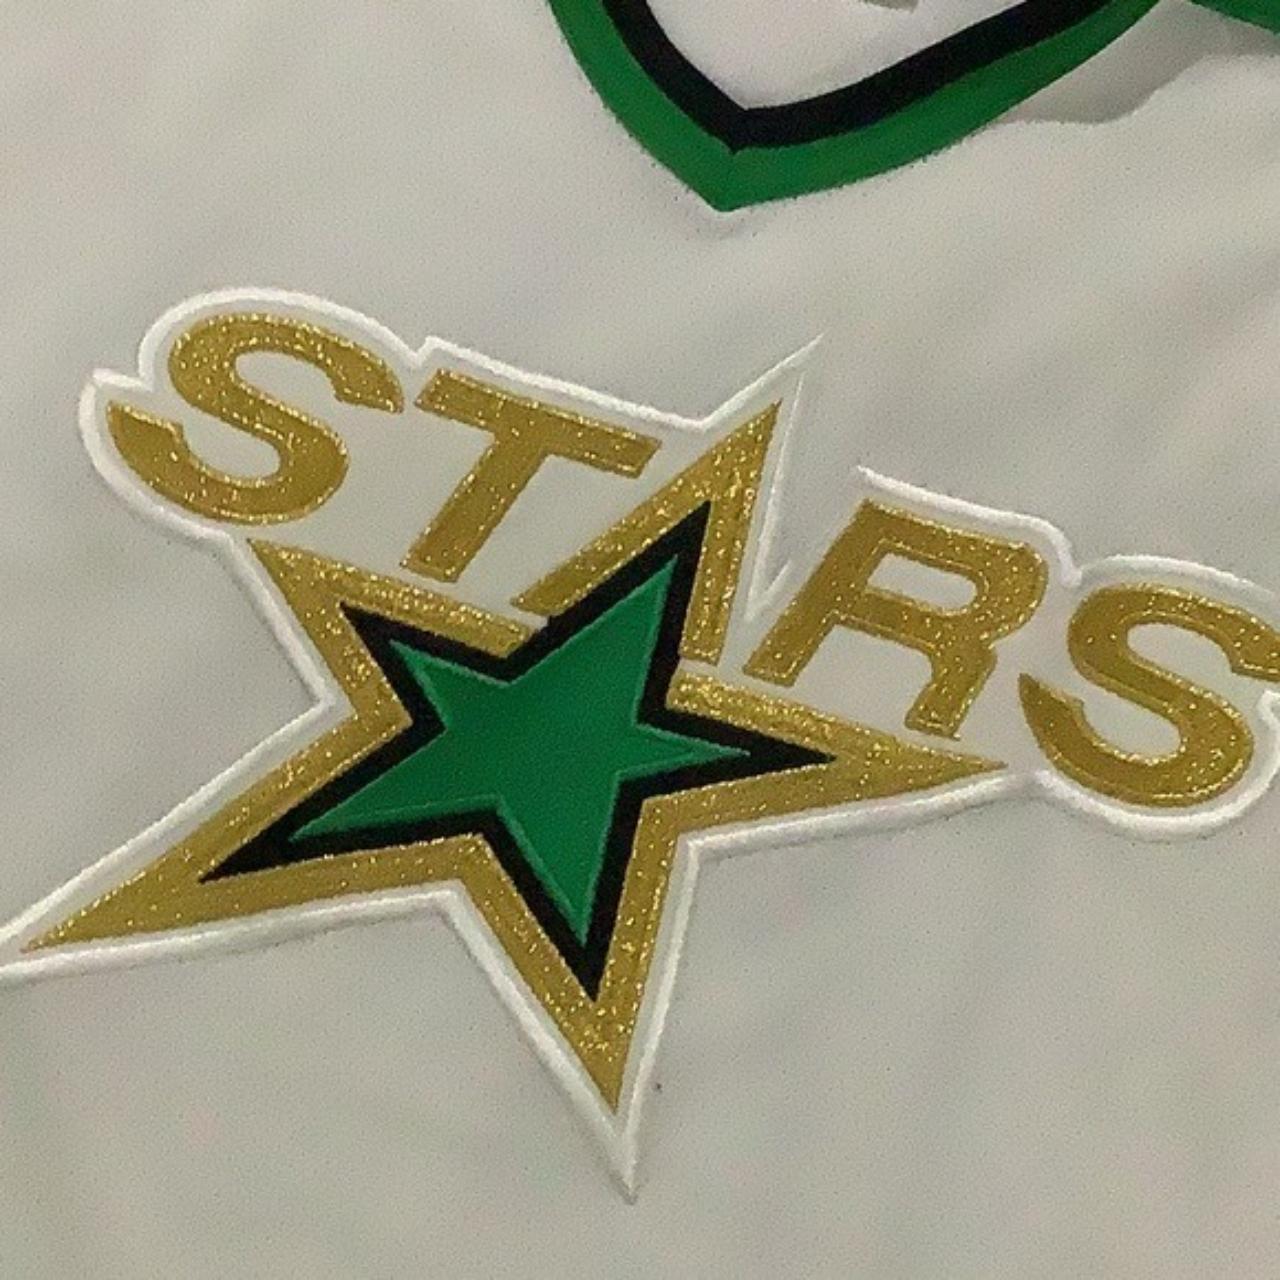 Vintage 90's Dallas Stars hockey jersey Embroidered - Depop